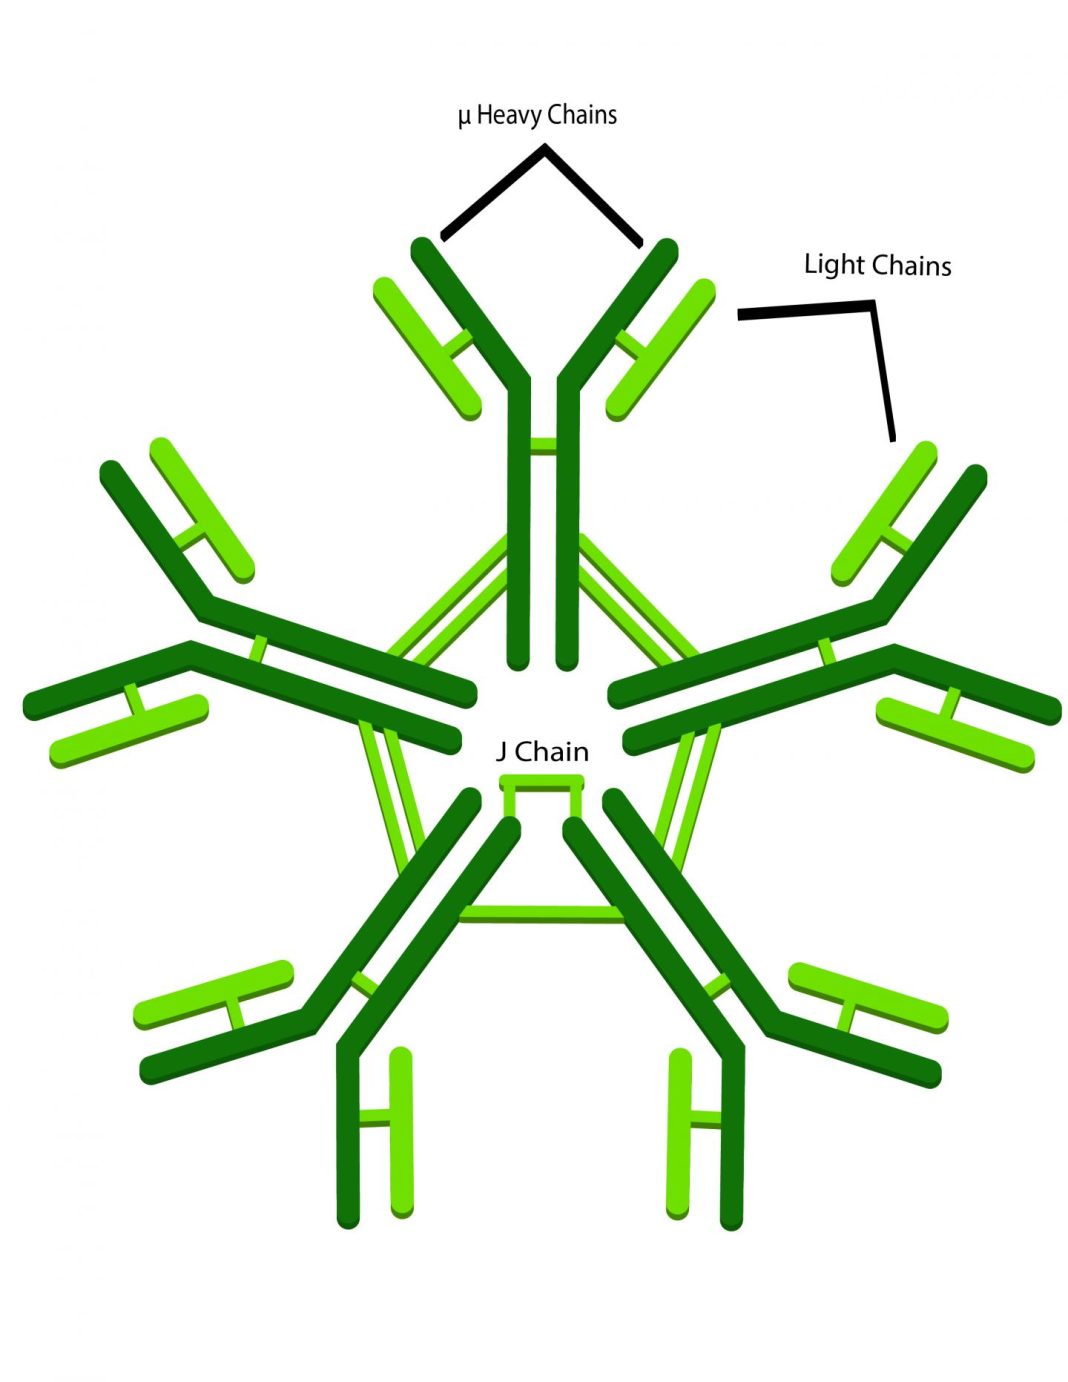 The IgM antibody has multiple arms to catch the virus